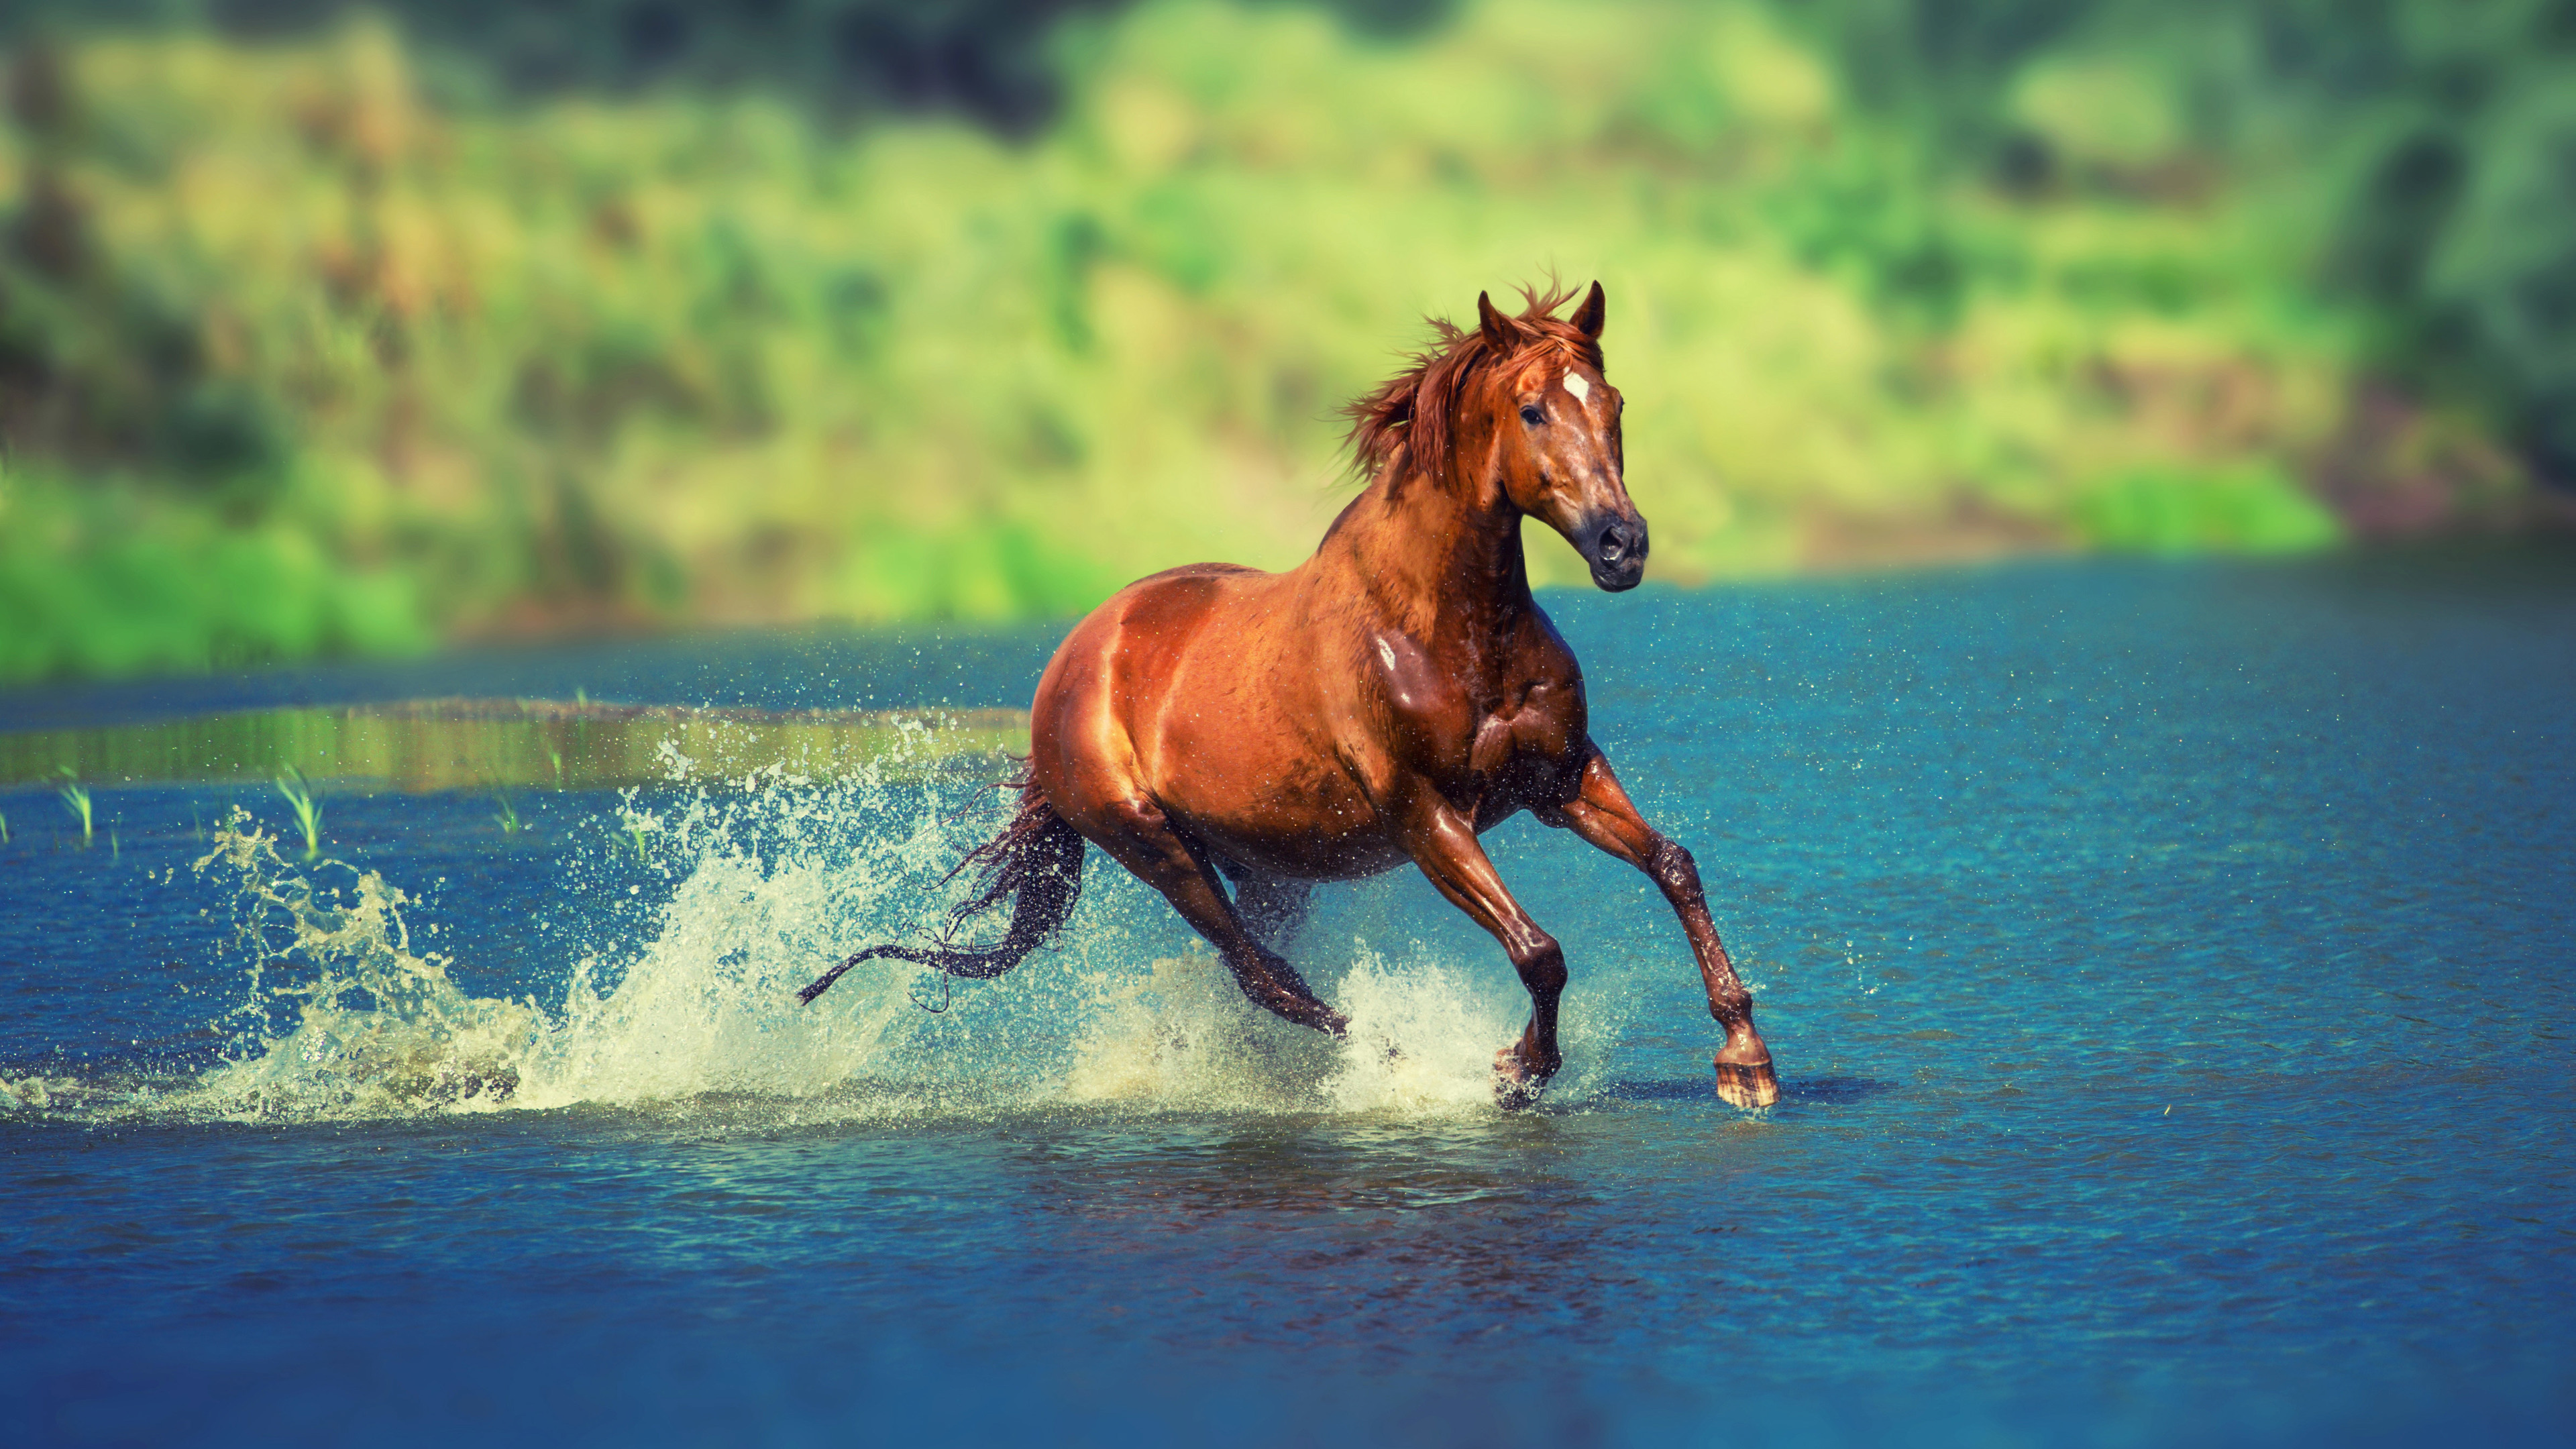 Wallpaper 4k Running Horse In Water 4k Wallpaper